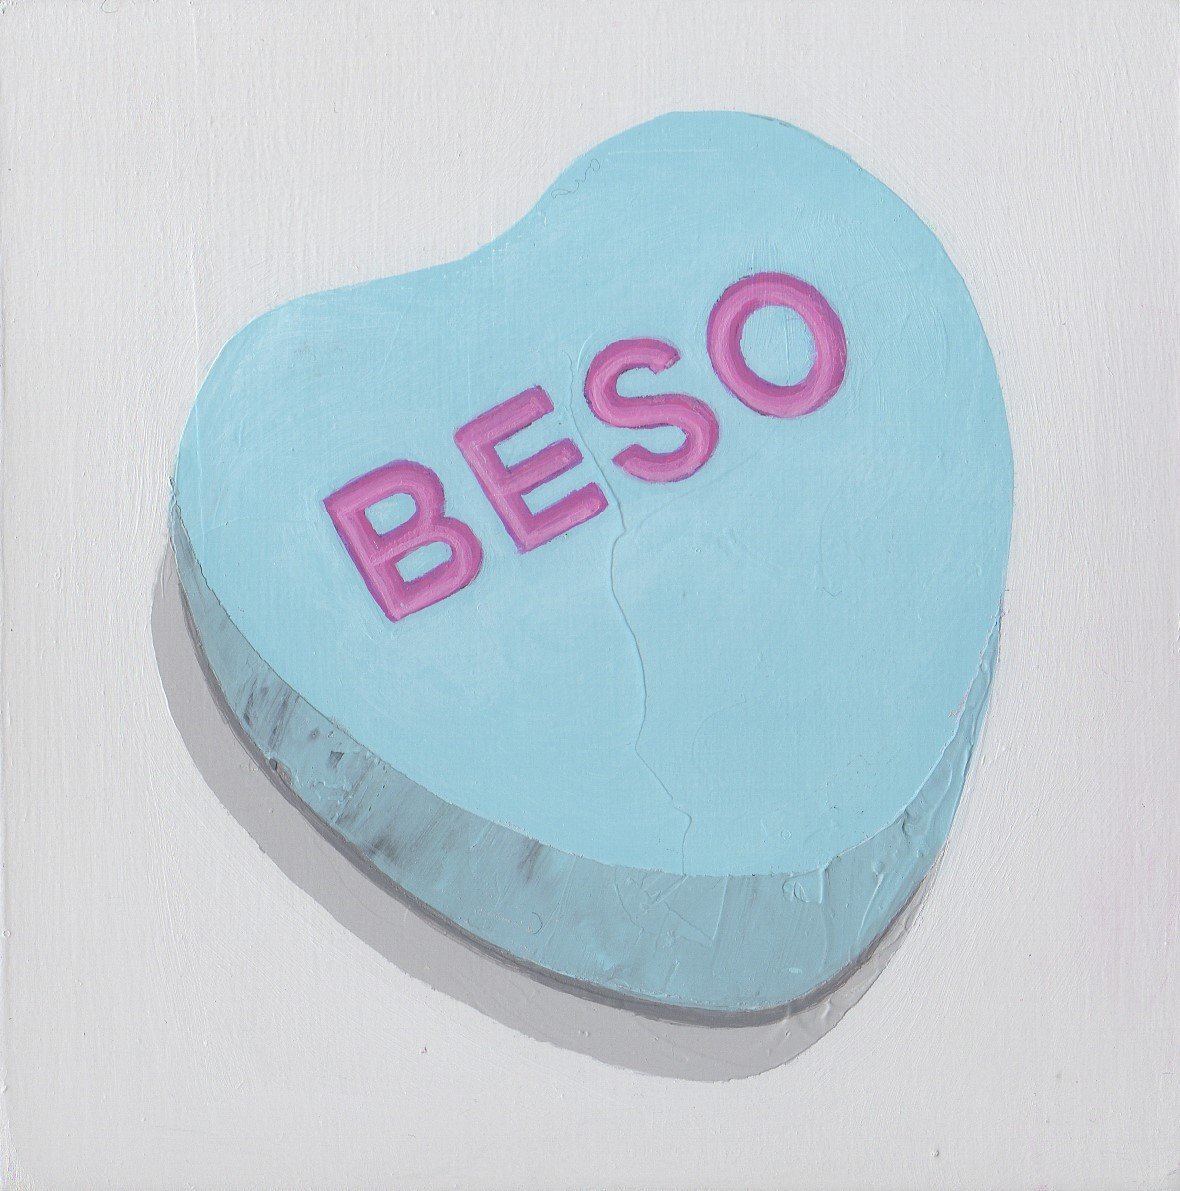 Conversation Heart Single BESO blue raspberry by Nicci SevierVuyk.jpg